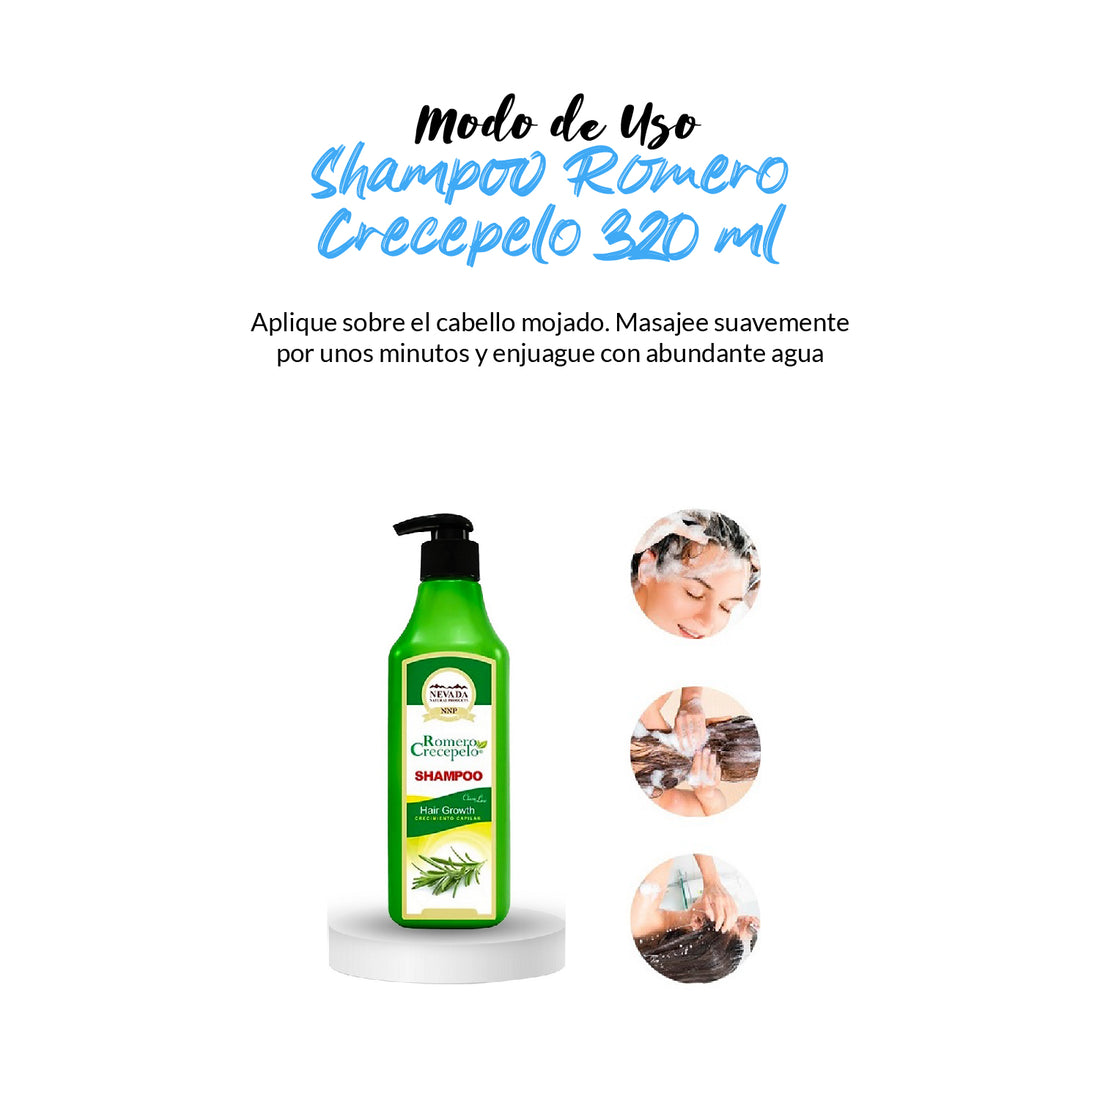 Shampoo Romero Crecepelo - NNP x 320 ml